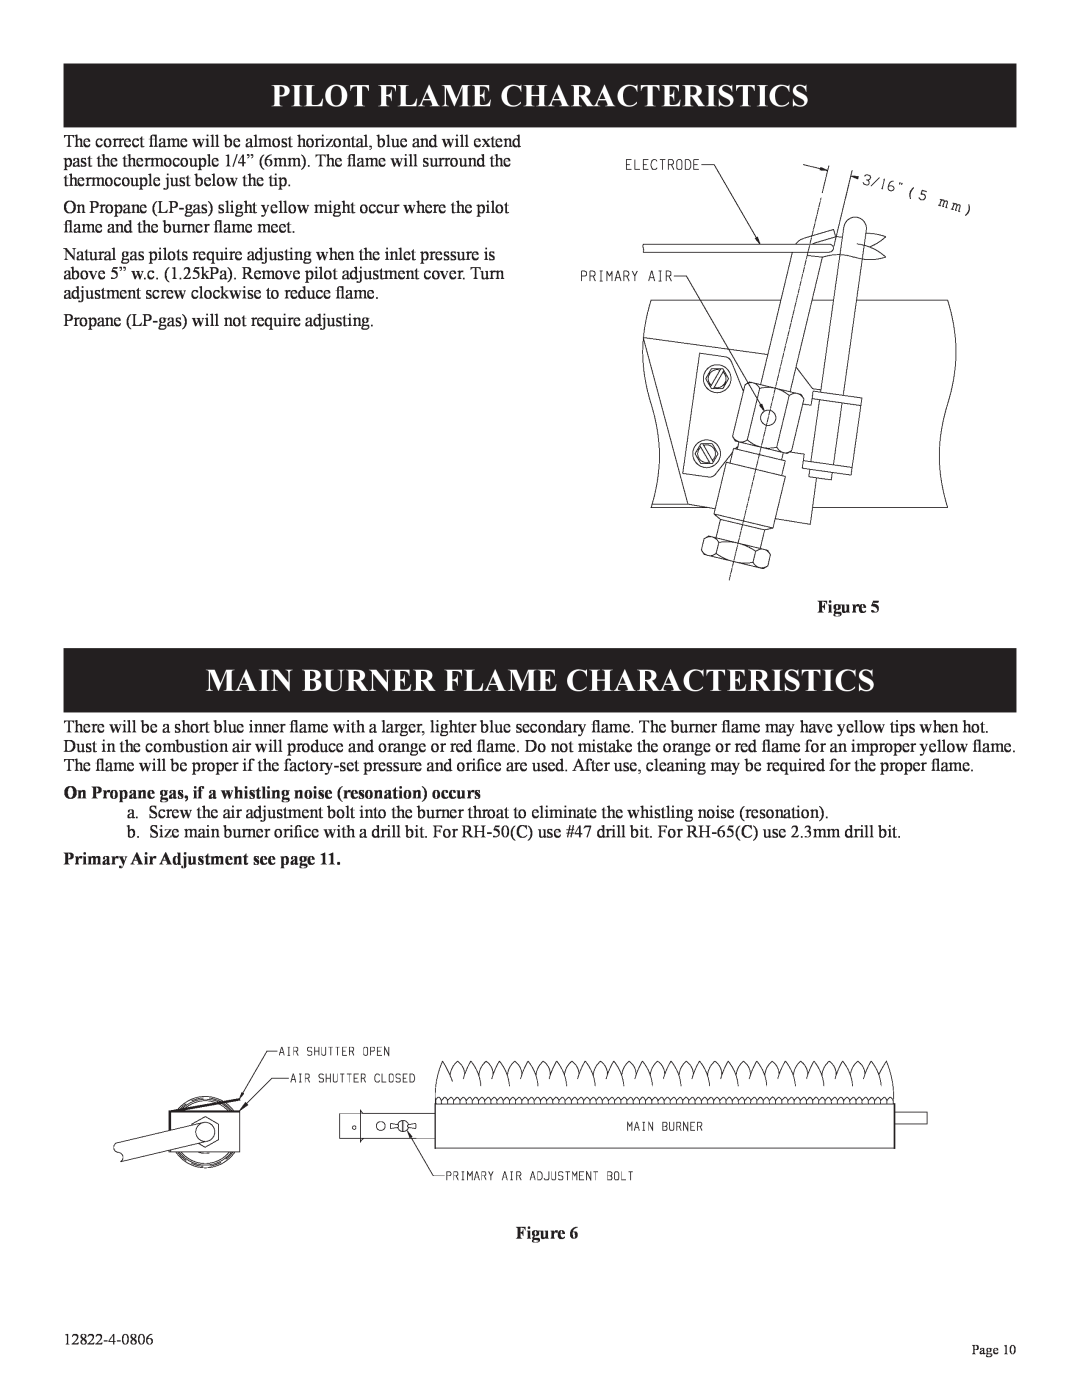 Empire Comfort Systems RH50C-1, RH-50-6, RH-65-6, RH-65C-1 Pilot Flame Characteristics, Main Burner Flame Characteristics 